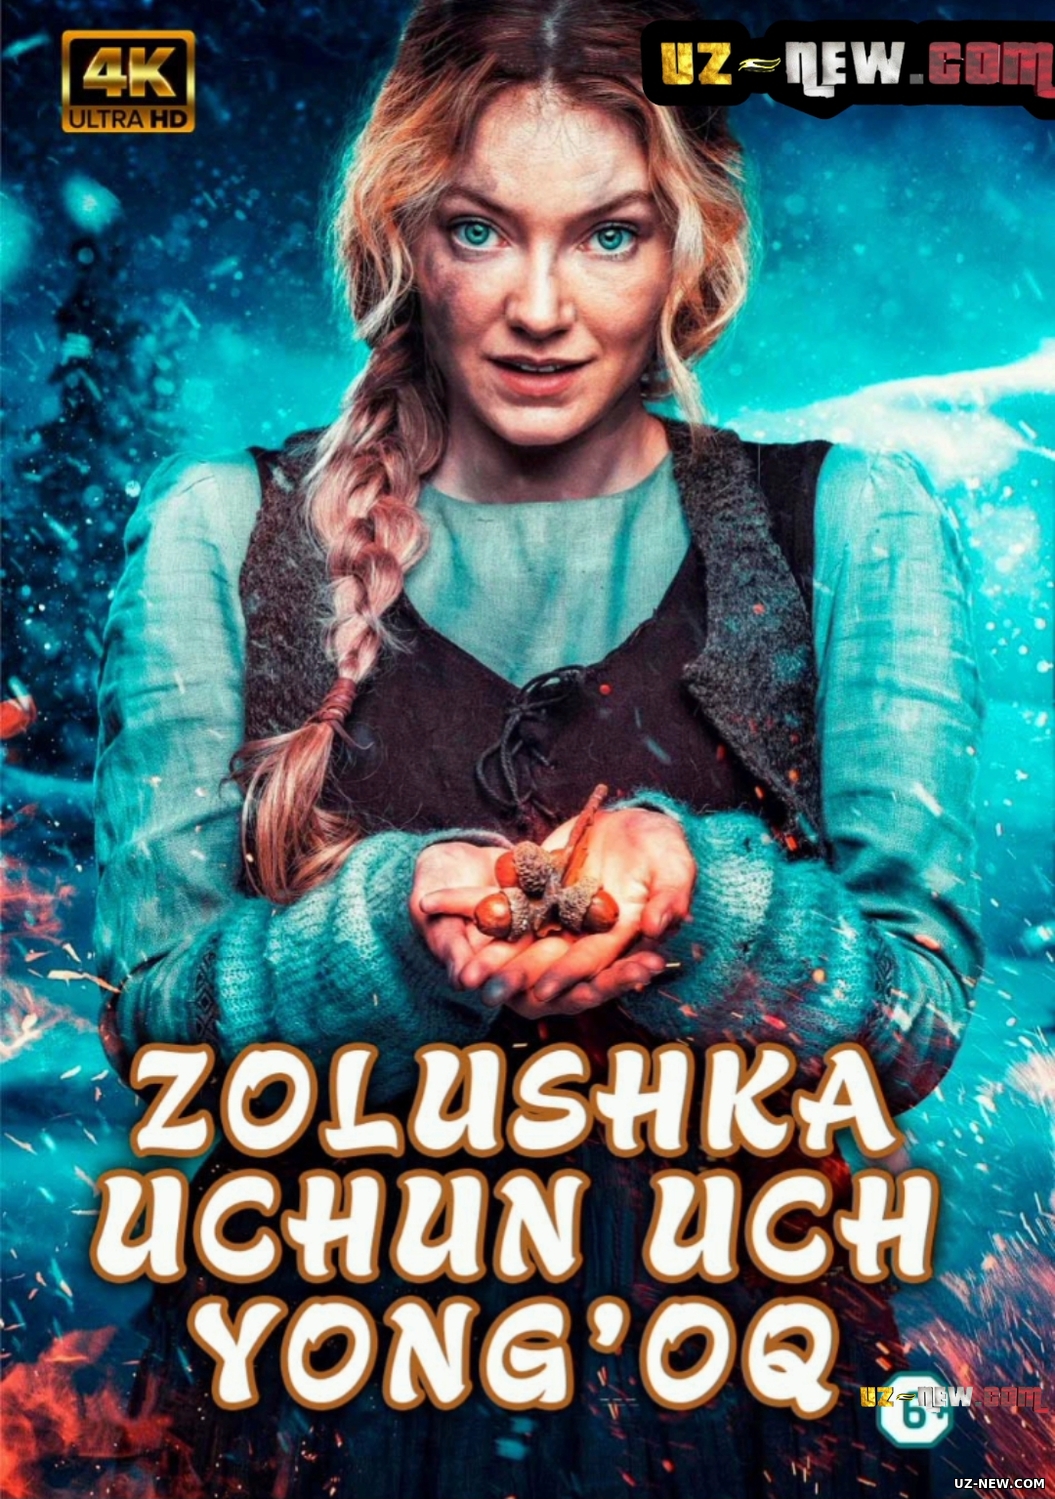 Sinderella / Zolushka uchun uch yong'oq (Norvegiya filmi Uzbek tilida O'zbekcha) 2022